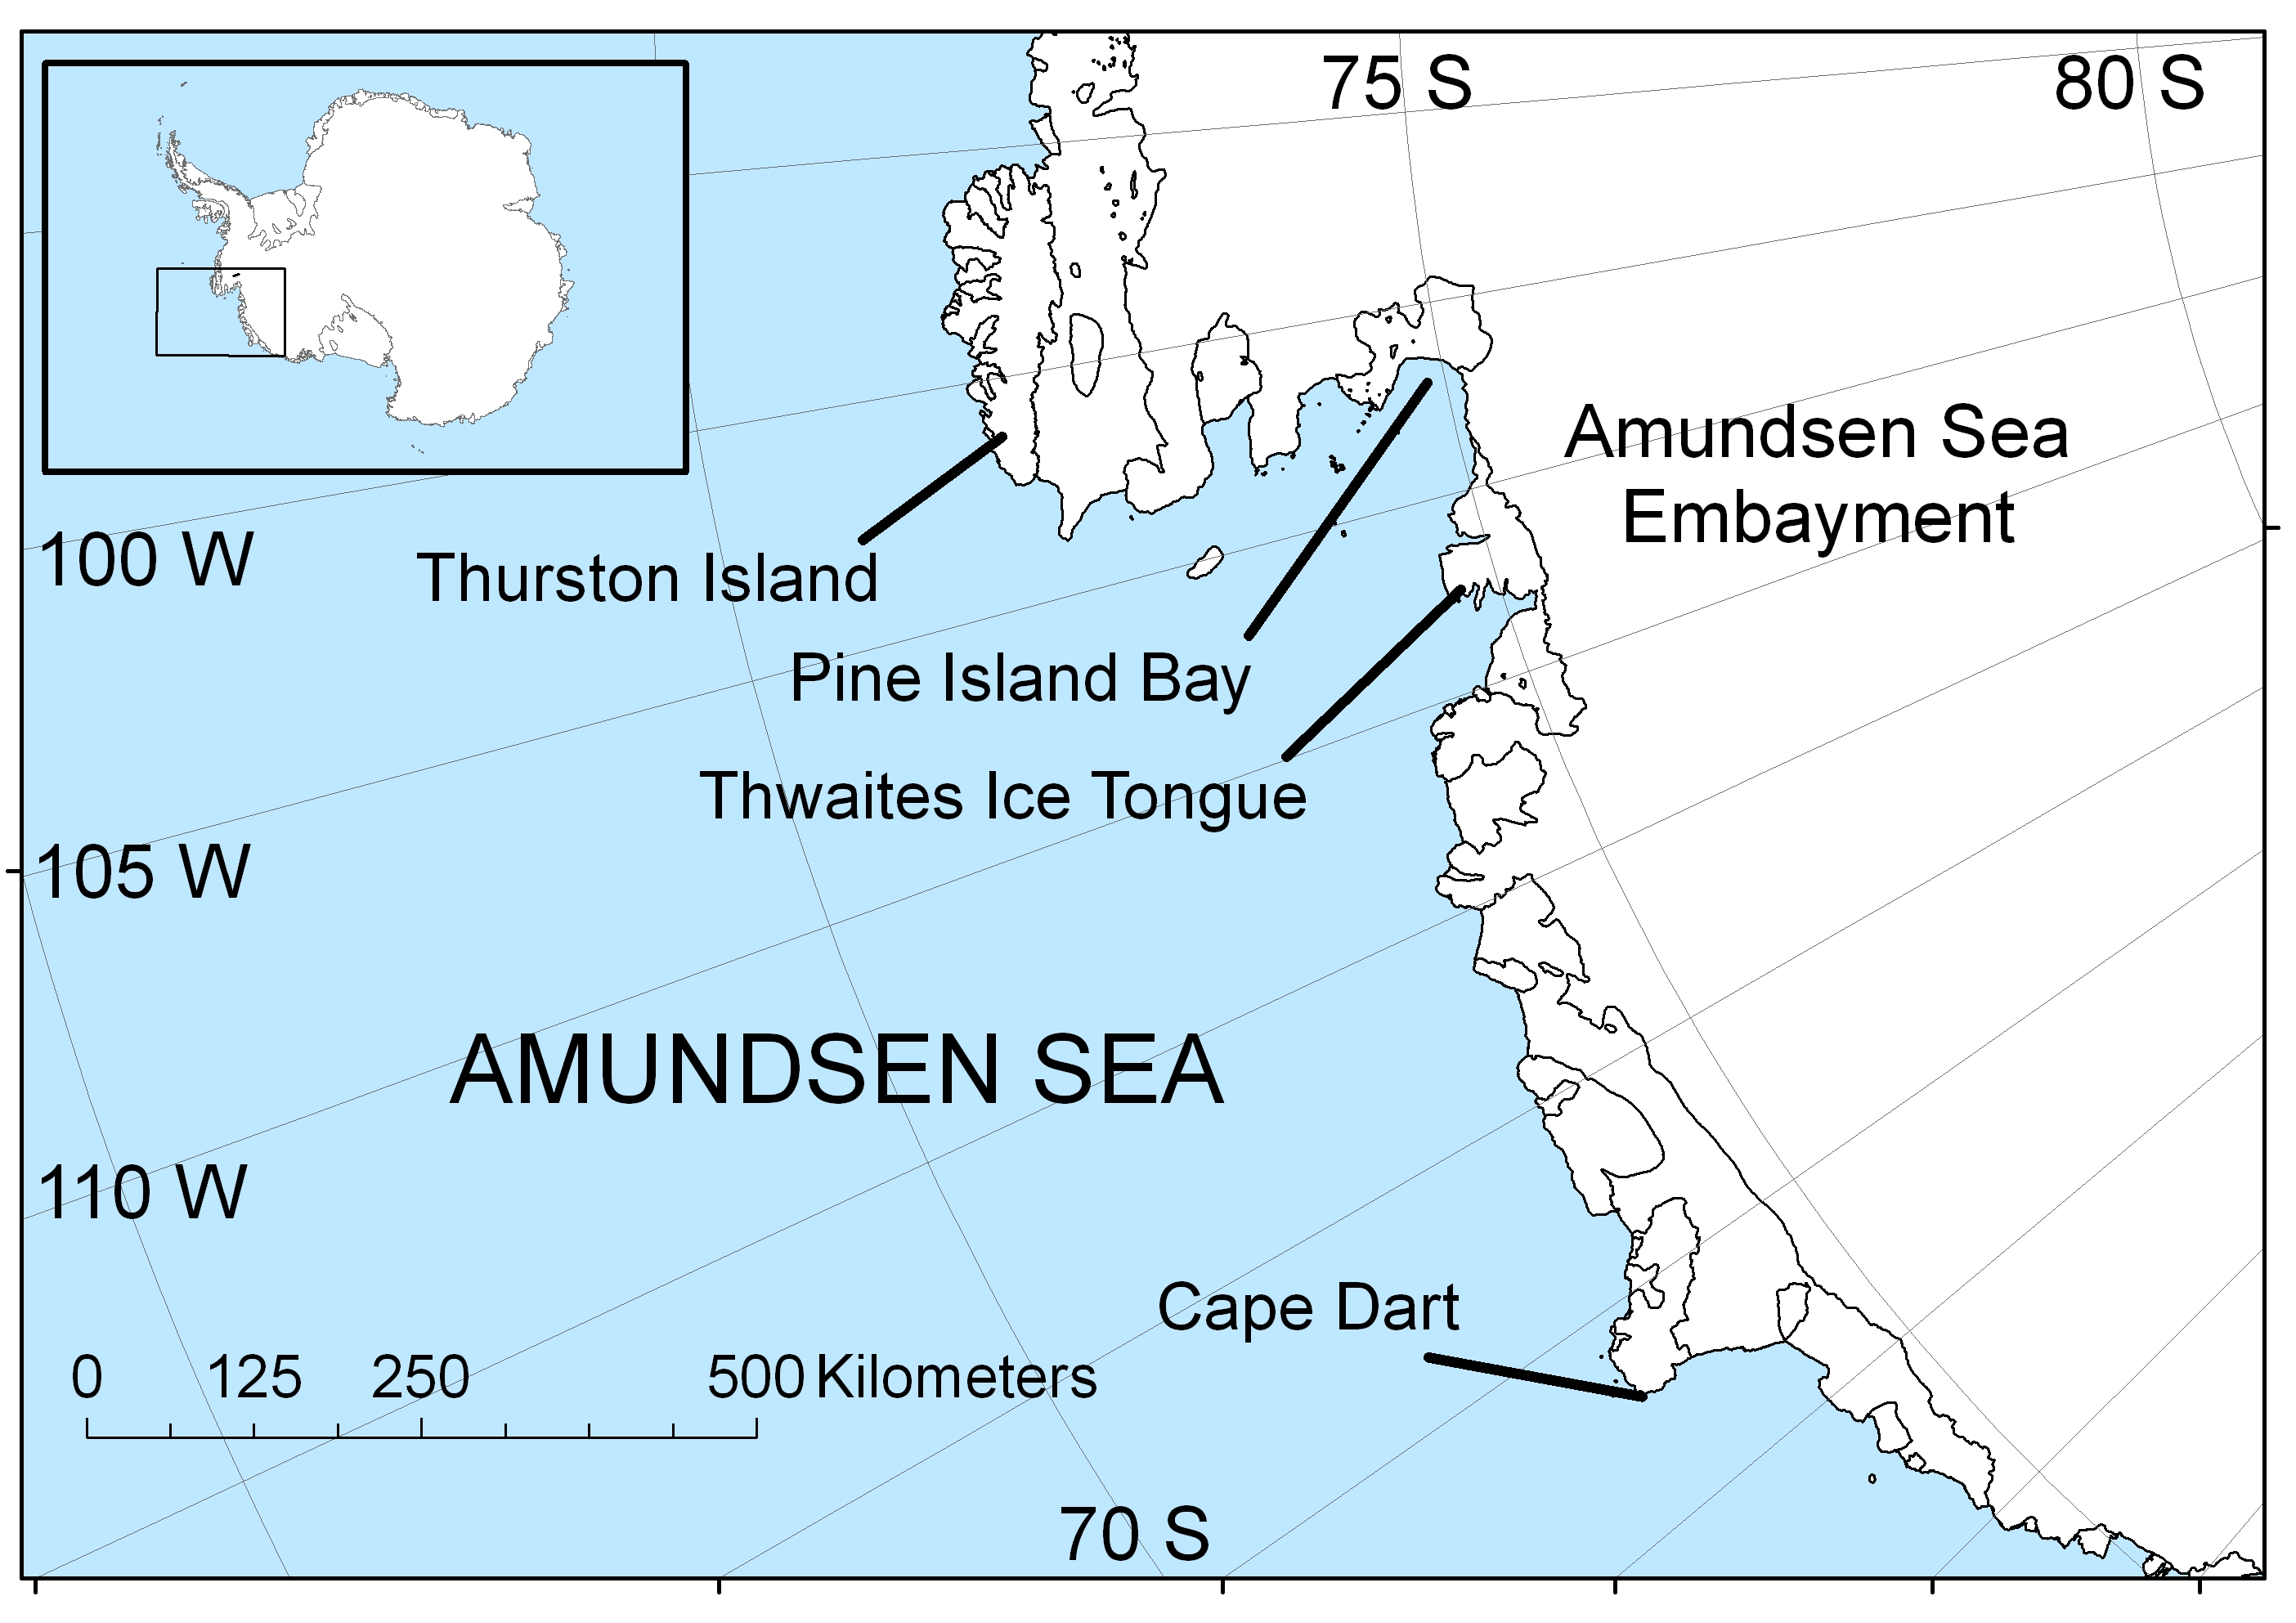 The Amundsen Sea area of Antarctica